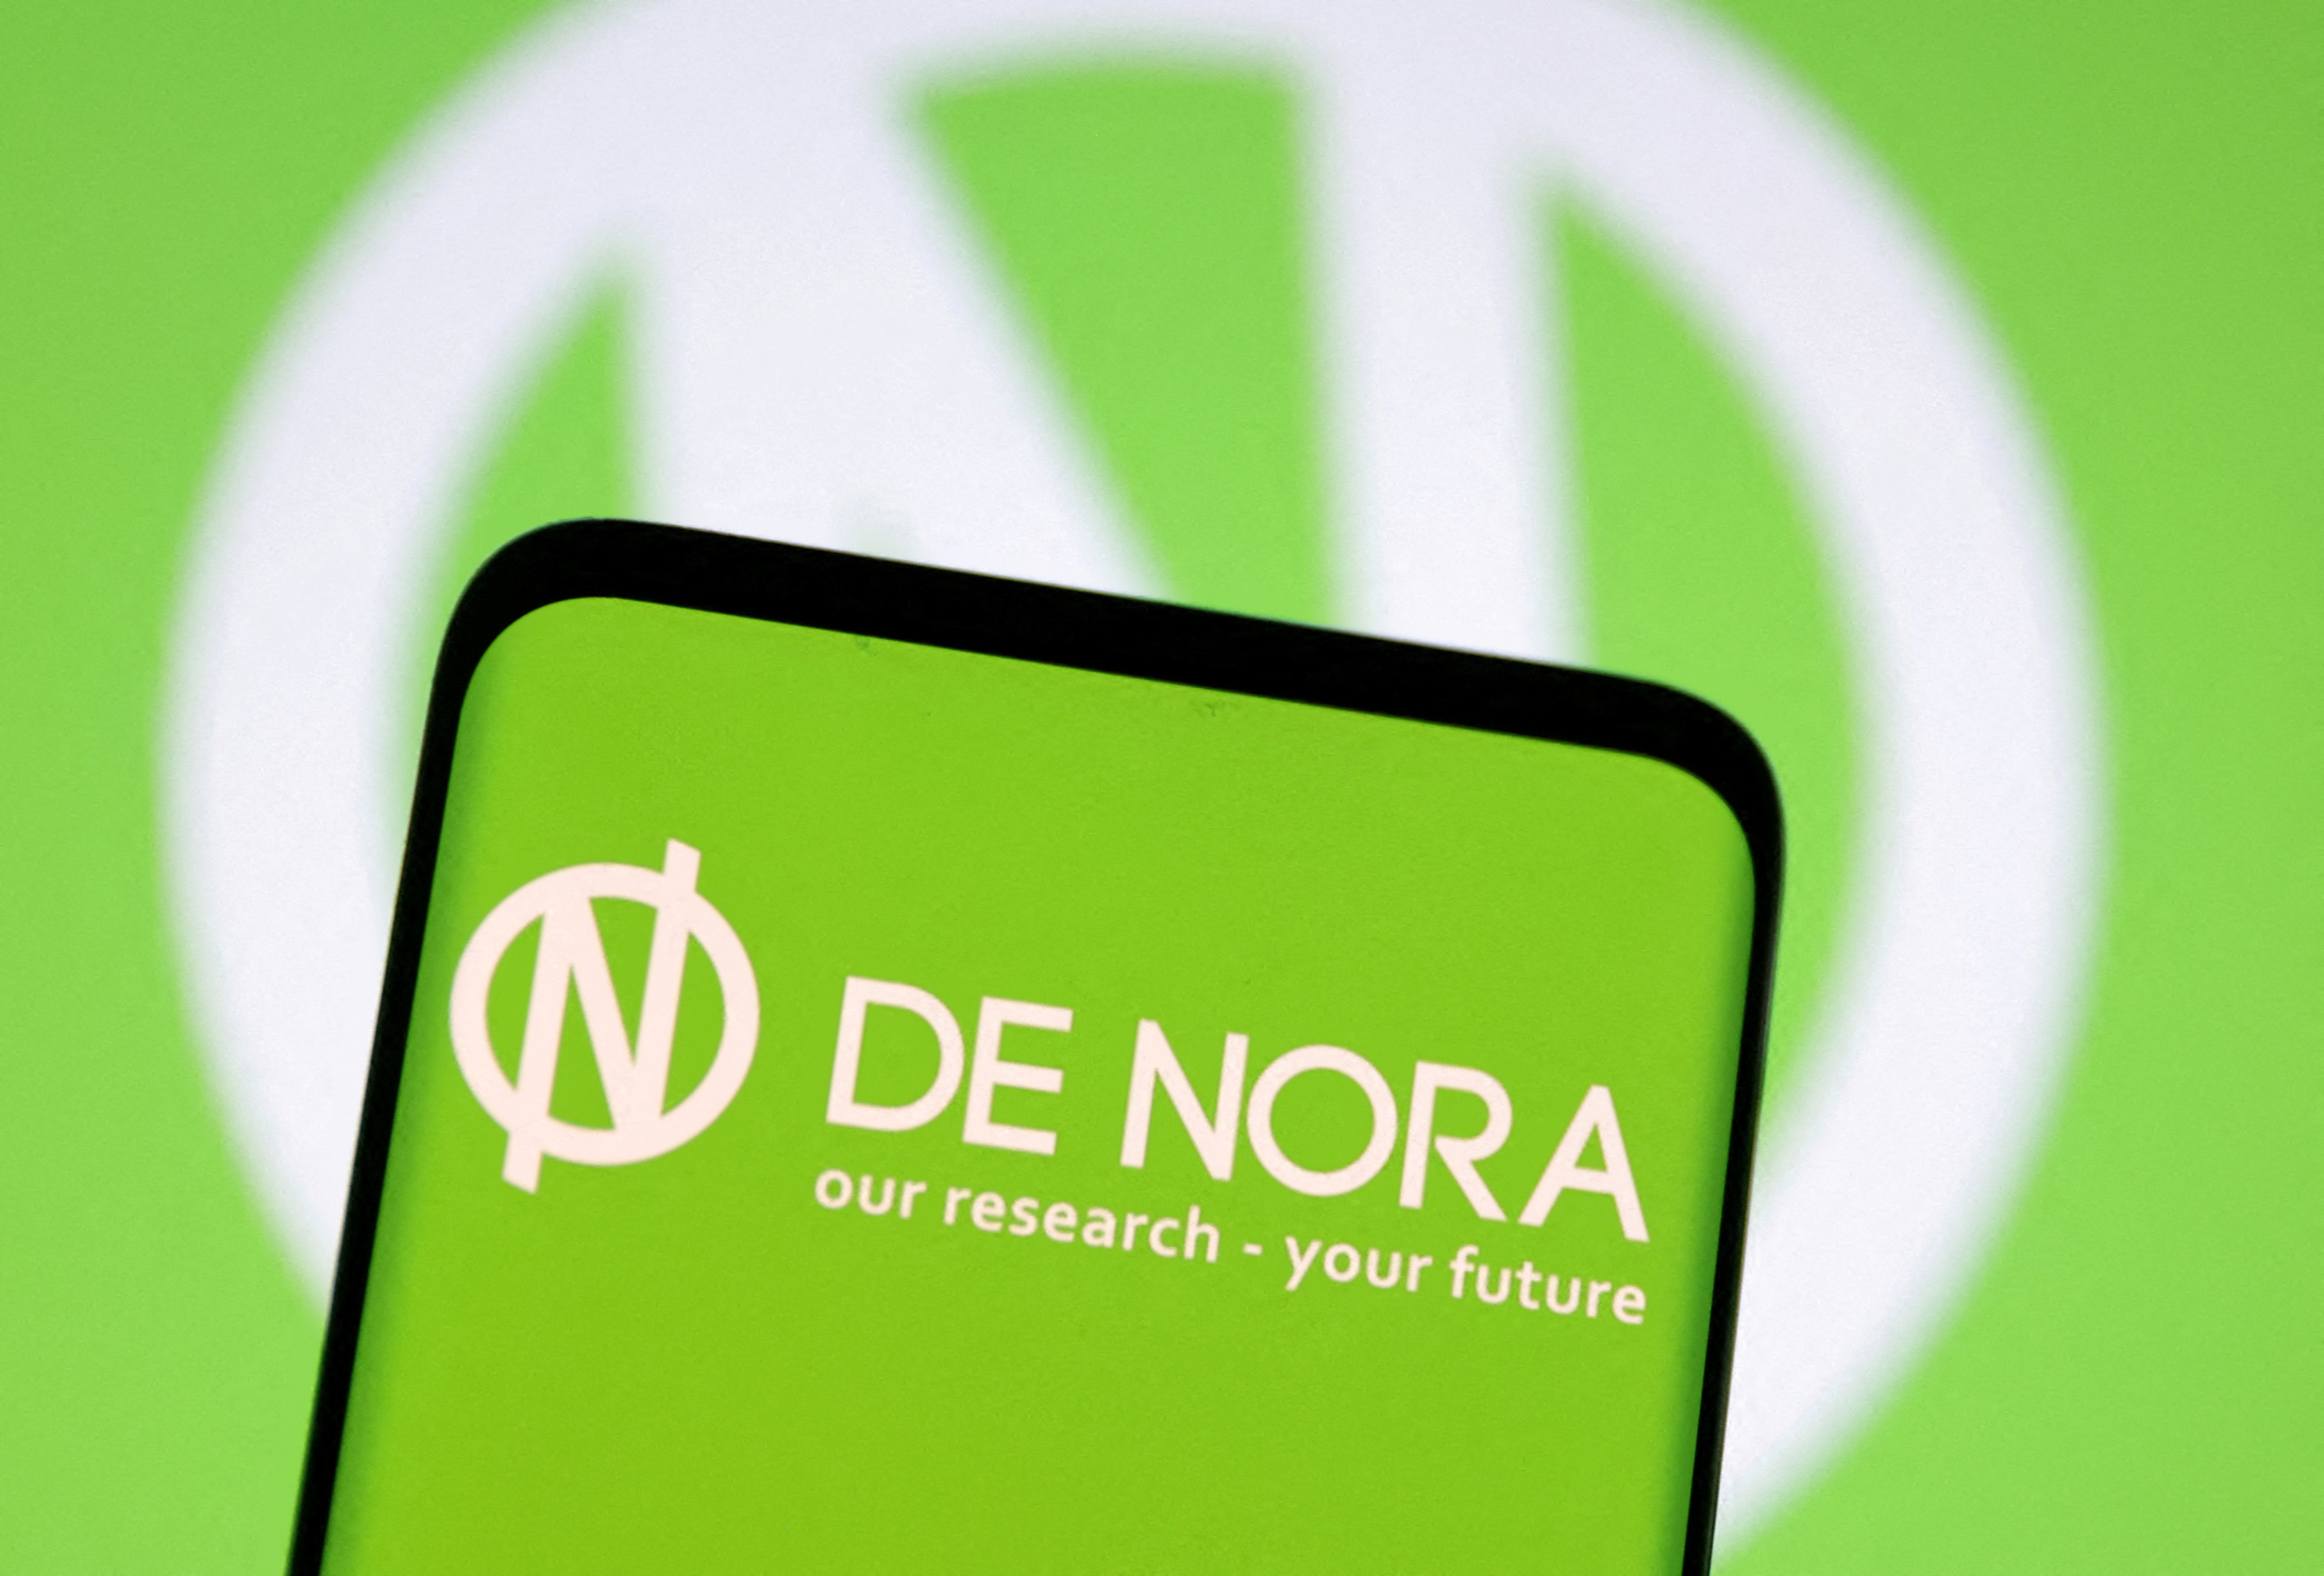 Illustration shows De Nora's logo